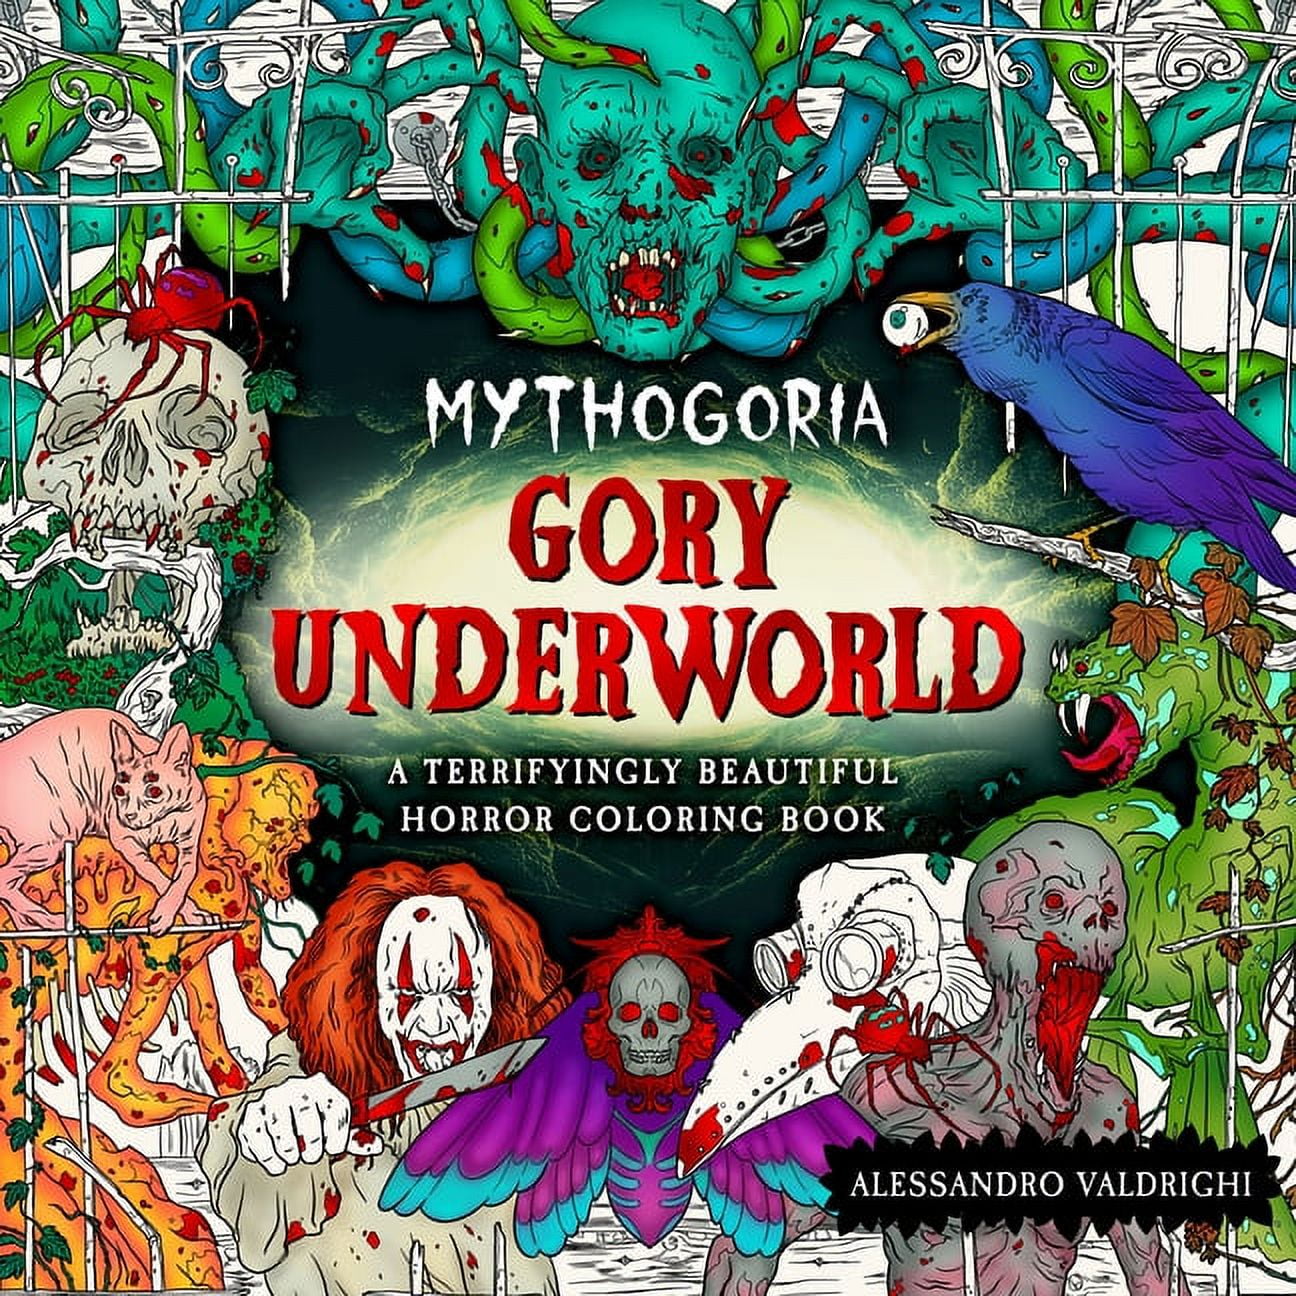 Mythogoria mythogoria gory underworld a terrifyingly beautiful horror coloring book paperback